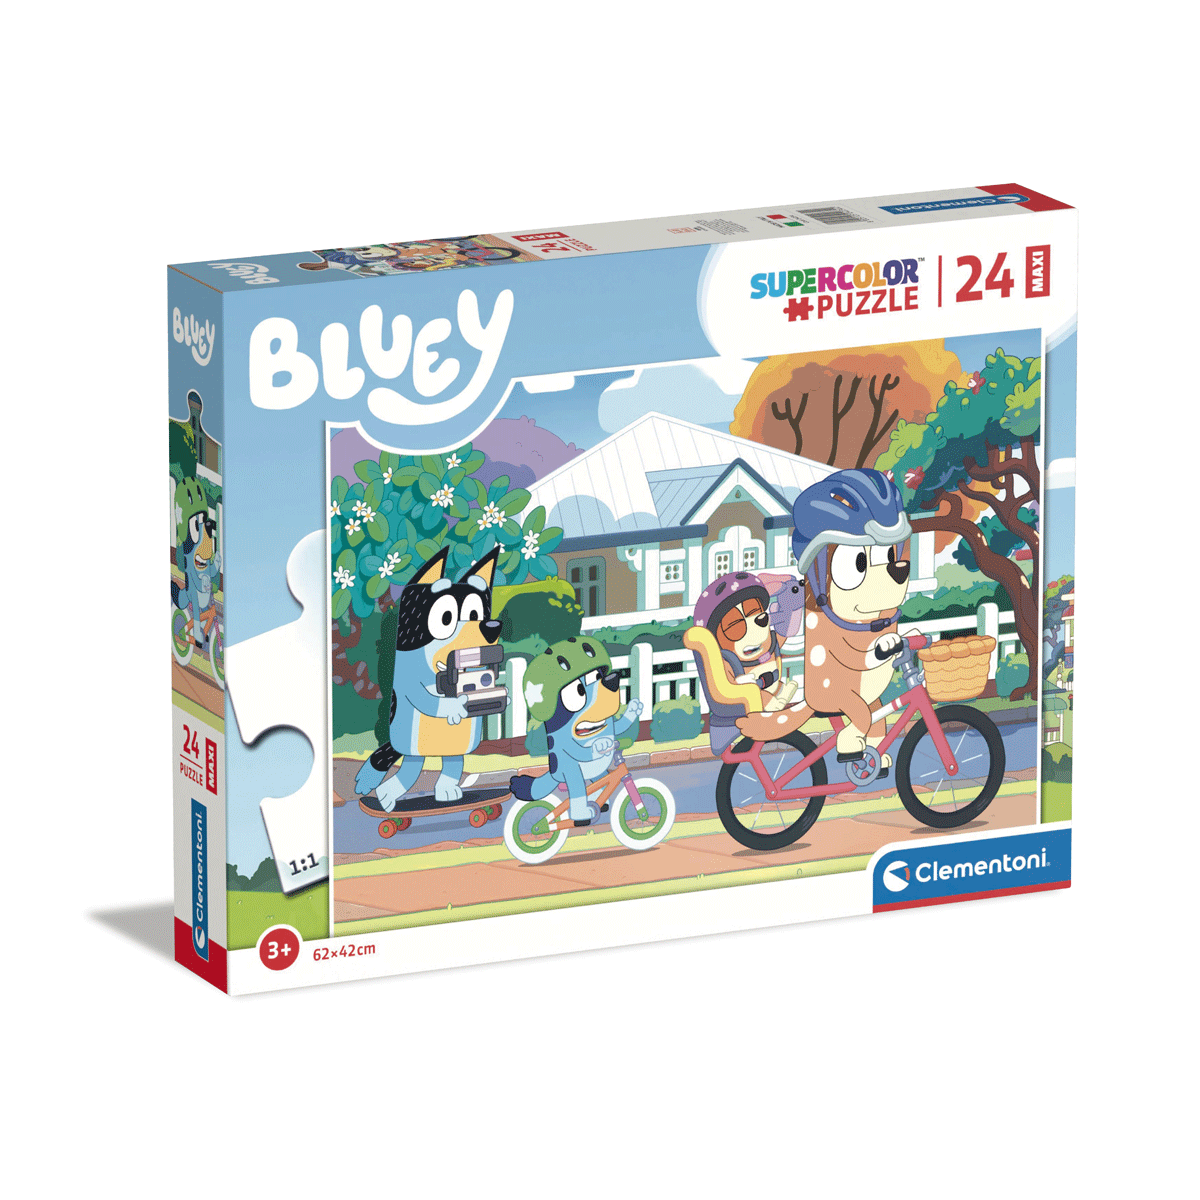 Clementoni - supercolor puzzle - bluey - puzzle bambini 24 maxi pezzi - 